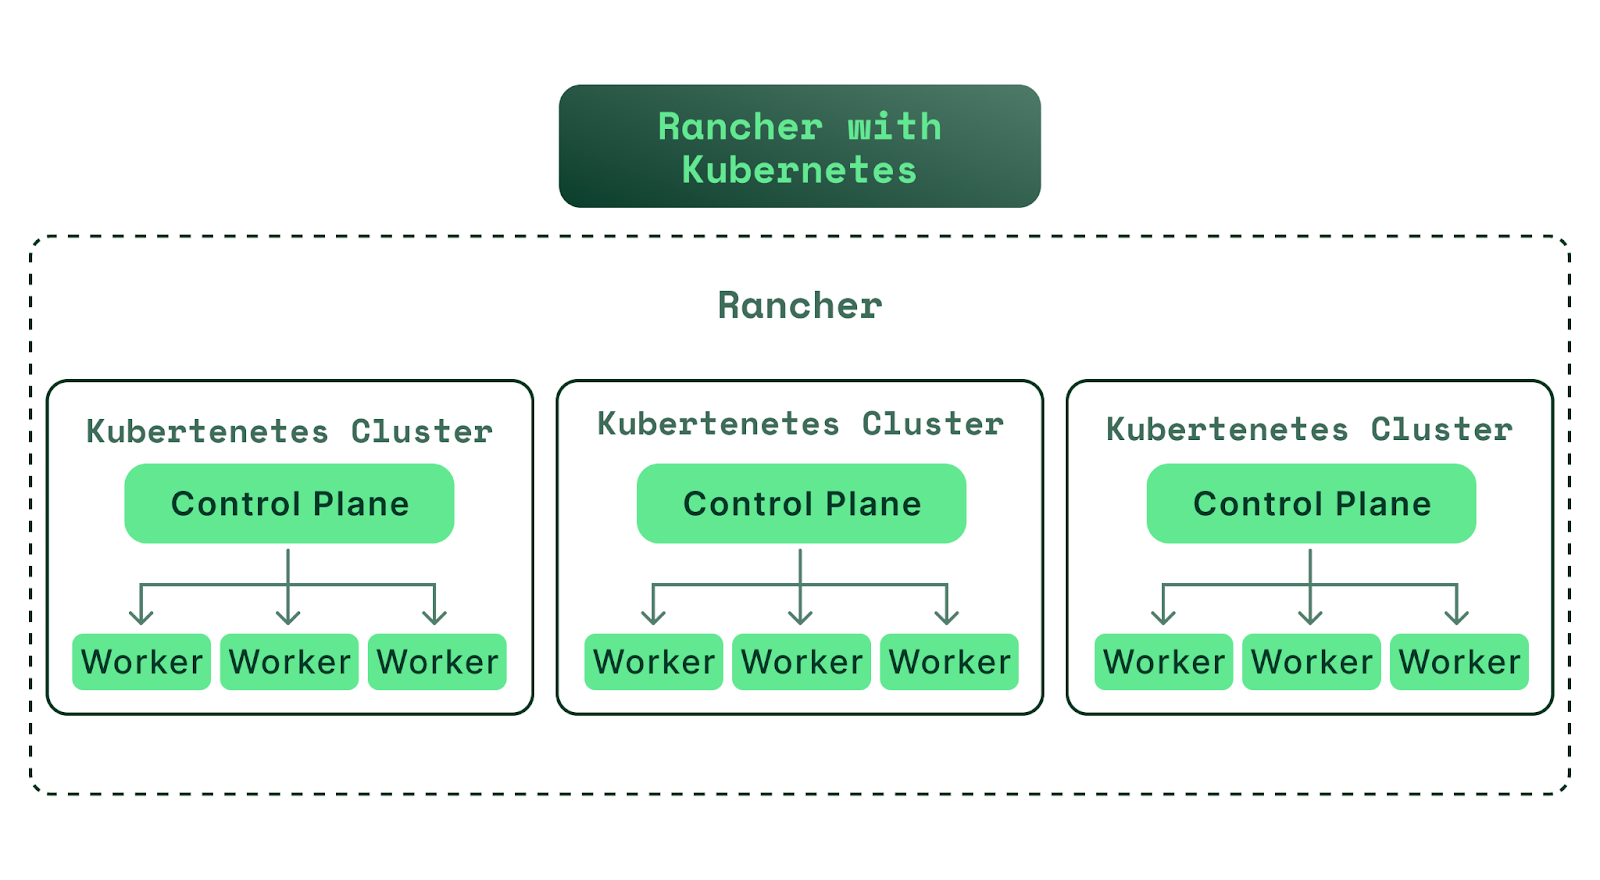 Rancher as a Kubernetes platform